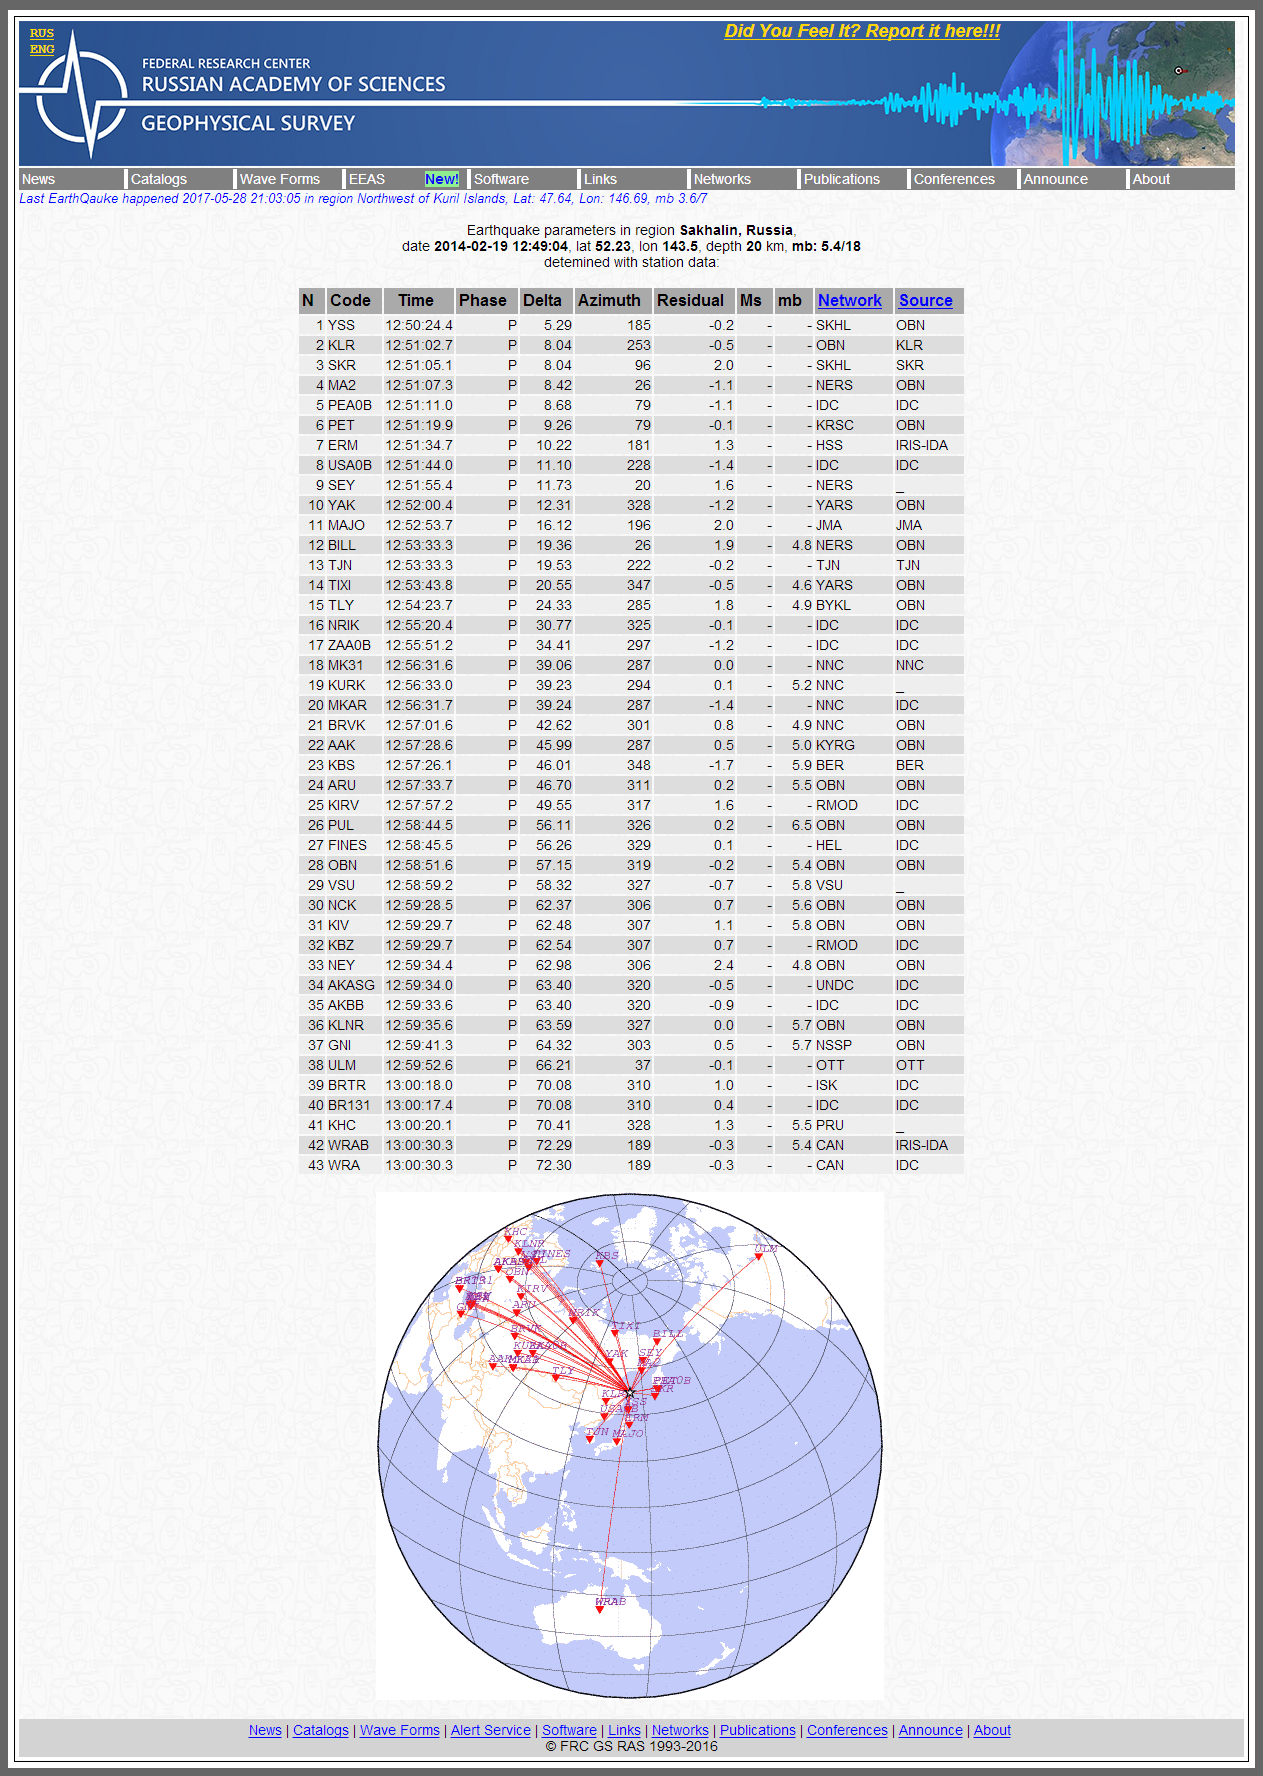 Alert Survey - Earthquake parameters in region.png